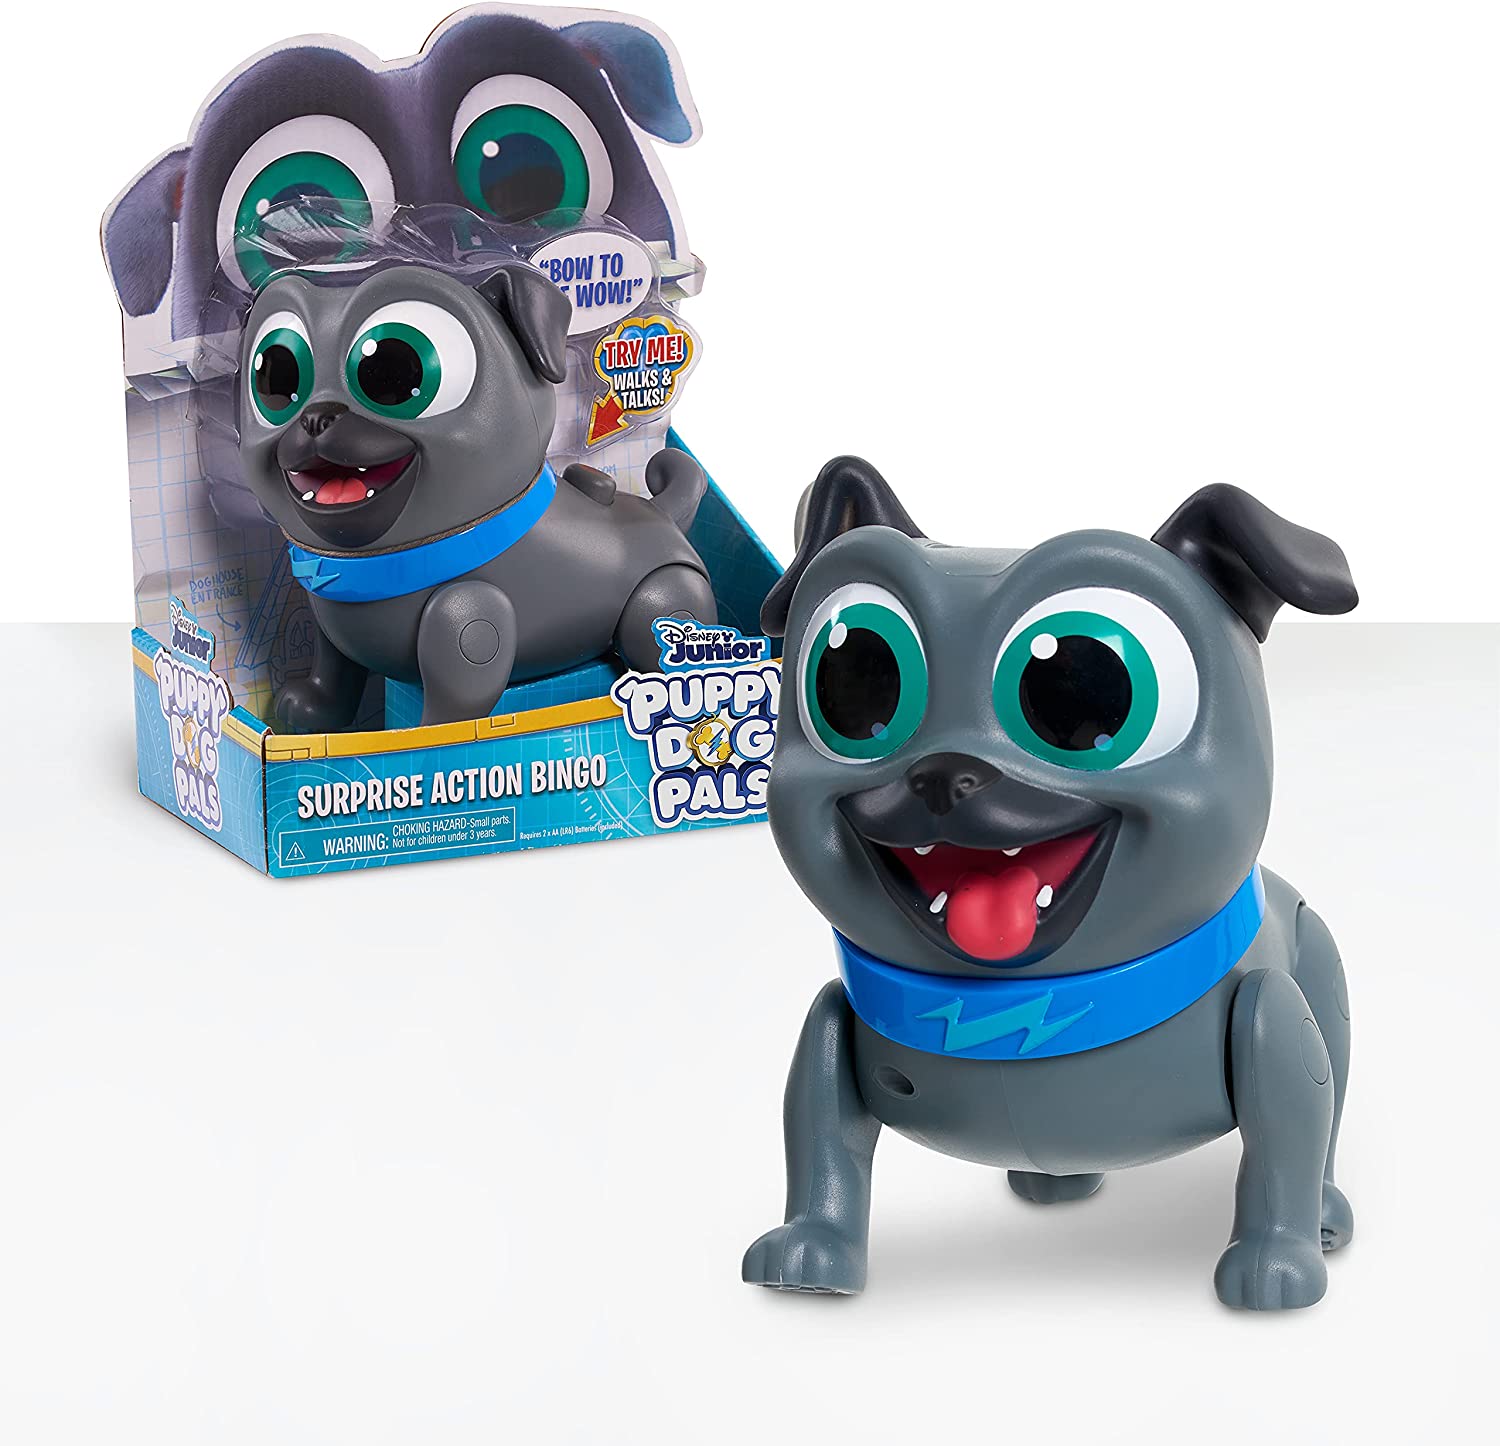 Disney Junior Puppy Dog Pals Bingo Surprise Action Figure Toy w/ Sounds & Phrases $6.80 + FS w/ Prime or on $25+